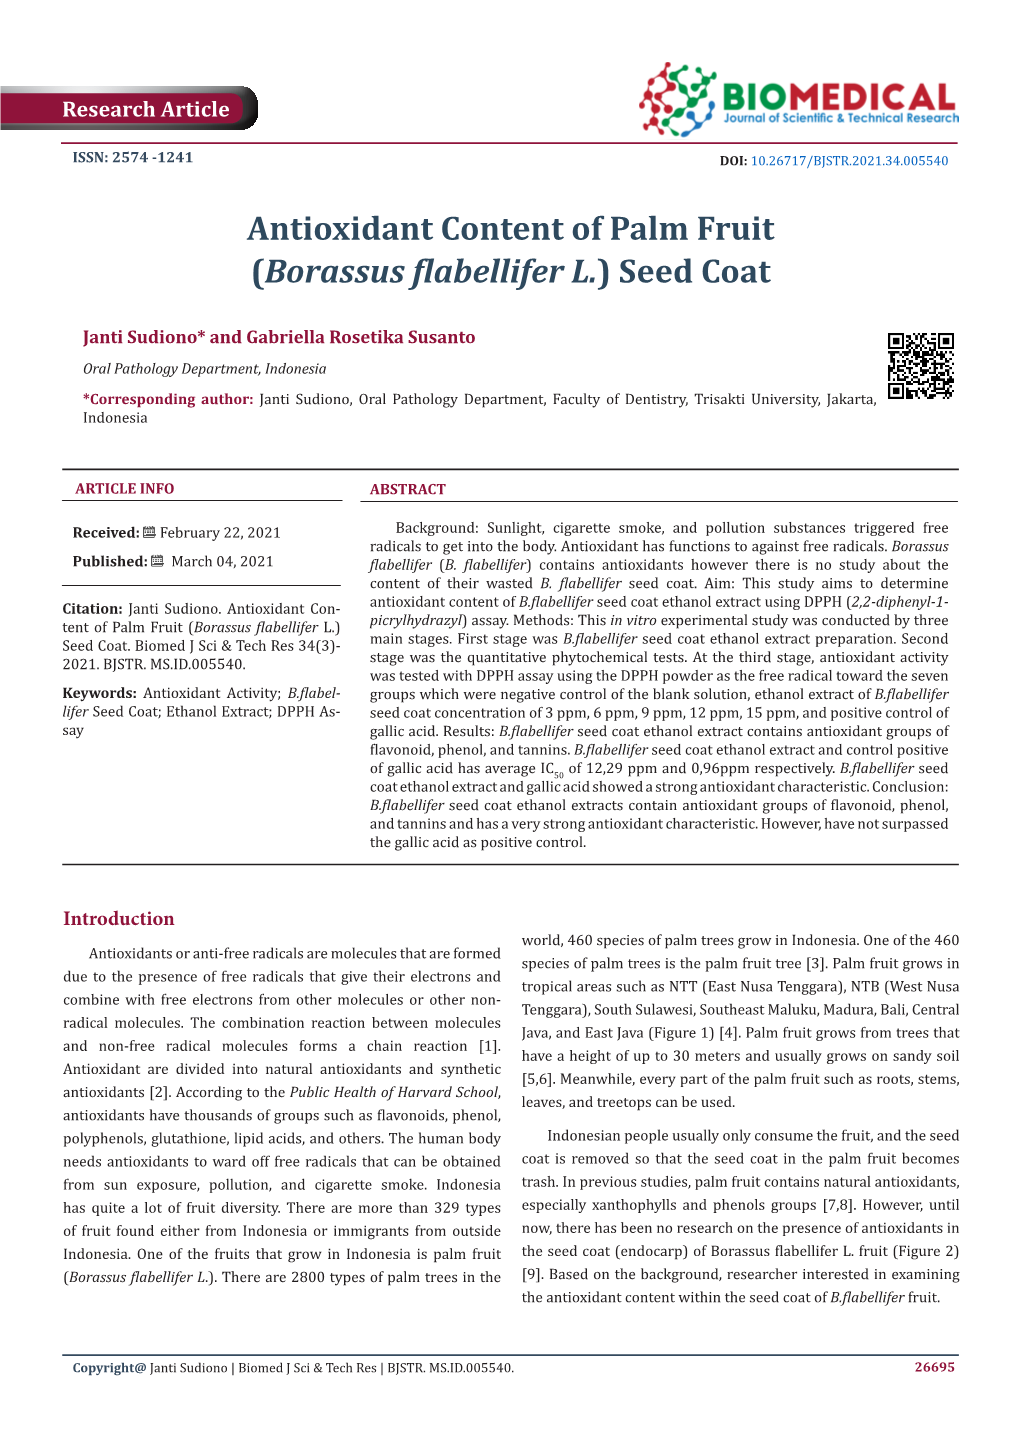 Antioxidant Content of Palm Fruit (Borassus Flabellifer L.) Seed Coat